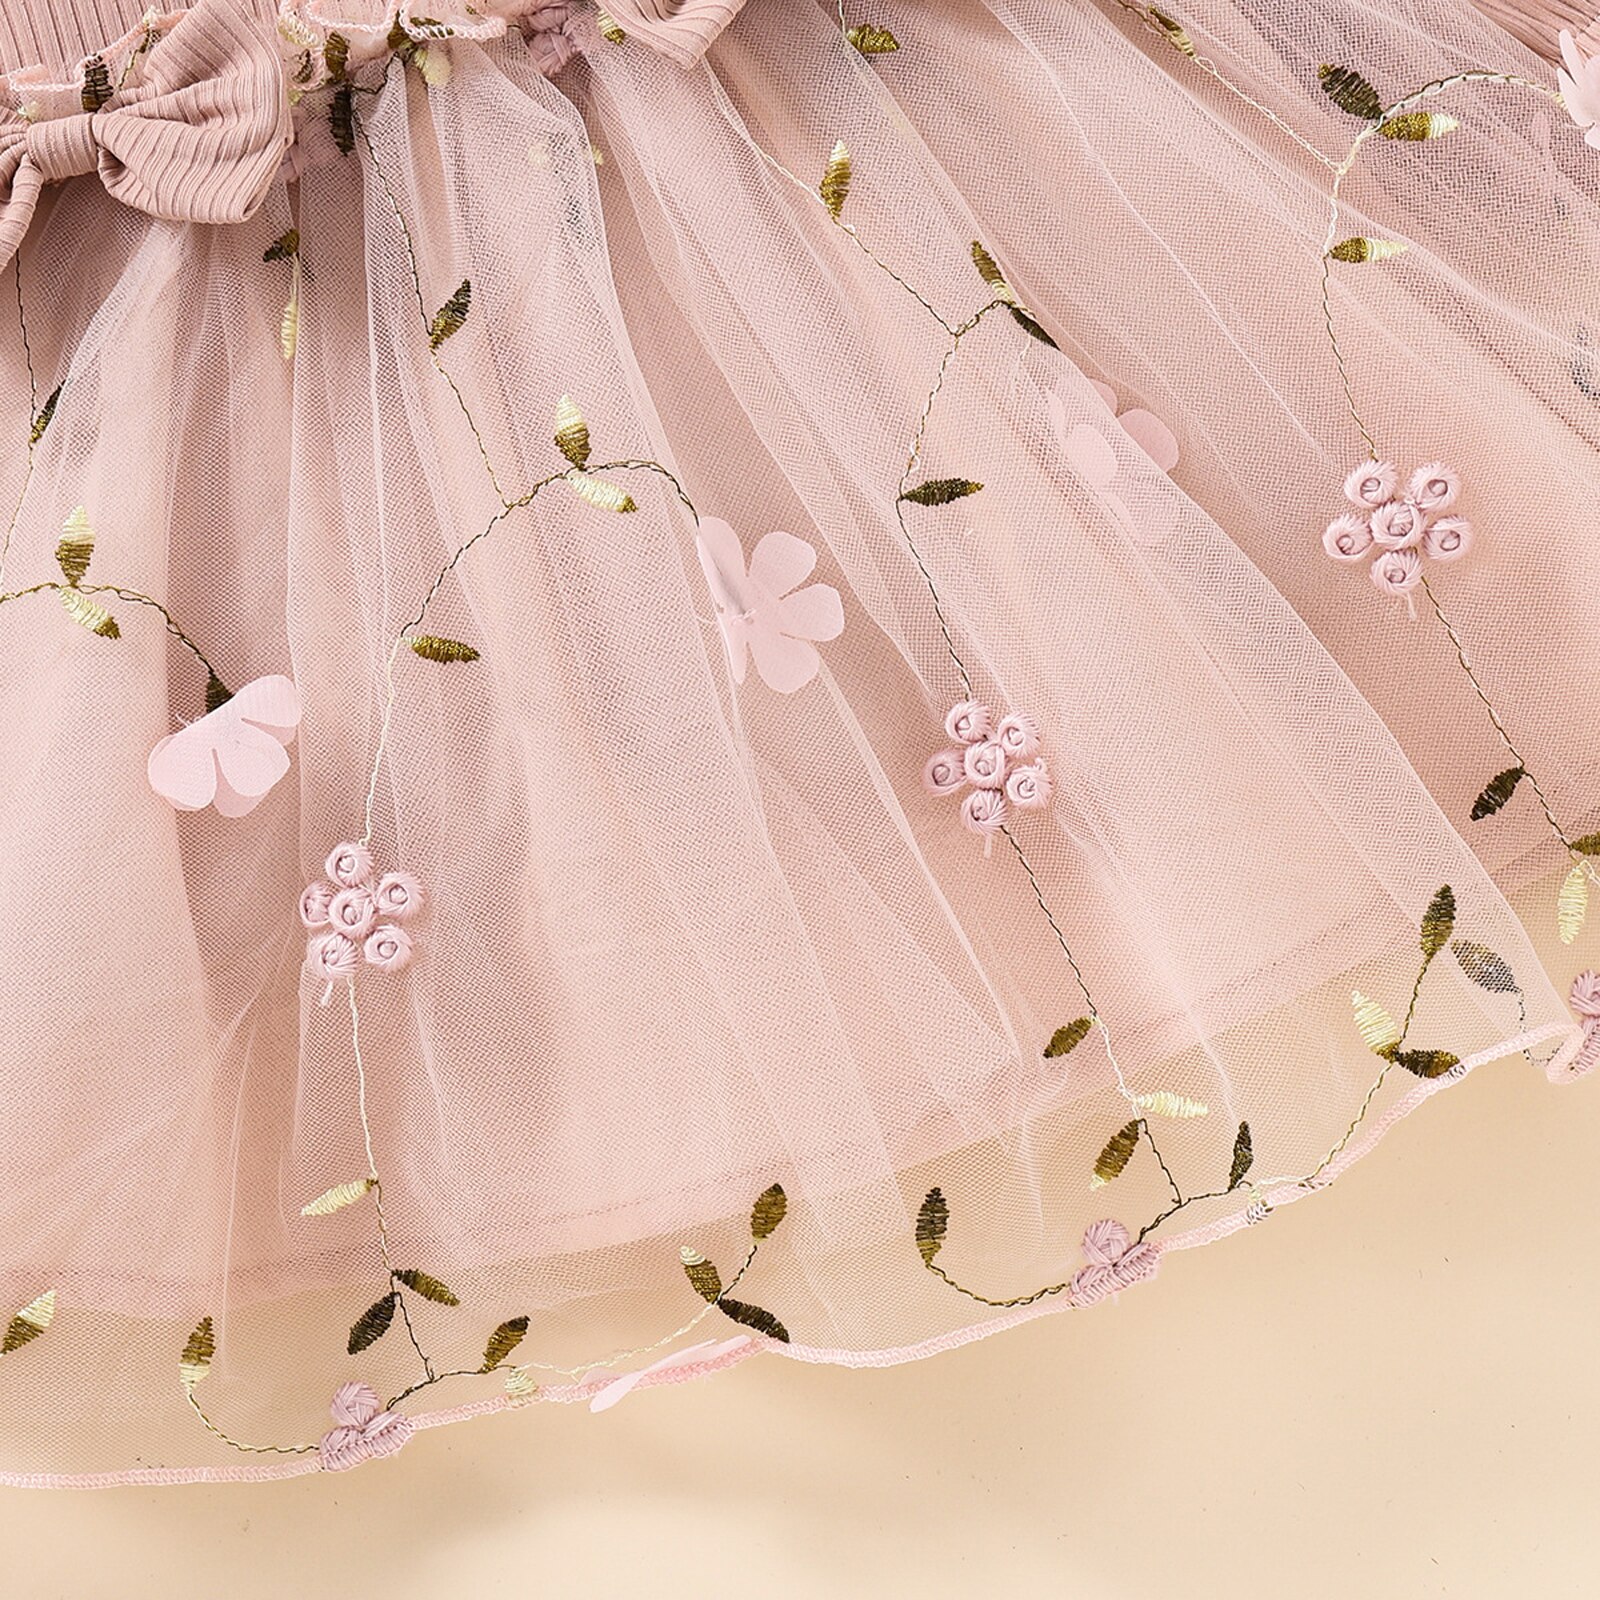 Citgeett-Autumn-Toddler-Girl-Sweet-Dress-Long-Sleeve-Flower-Embroidered-Tulle-Patchwork-A-Line-Dress-Bow-3